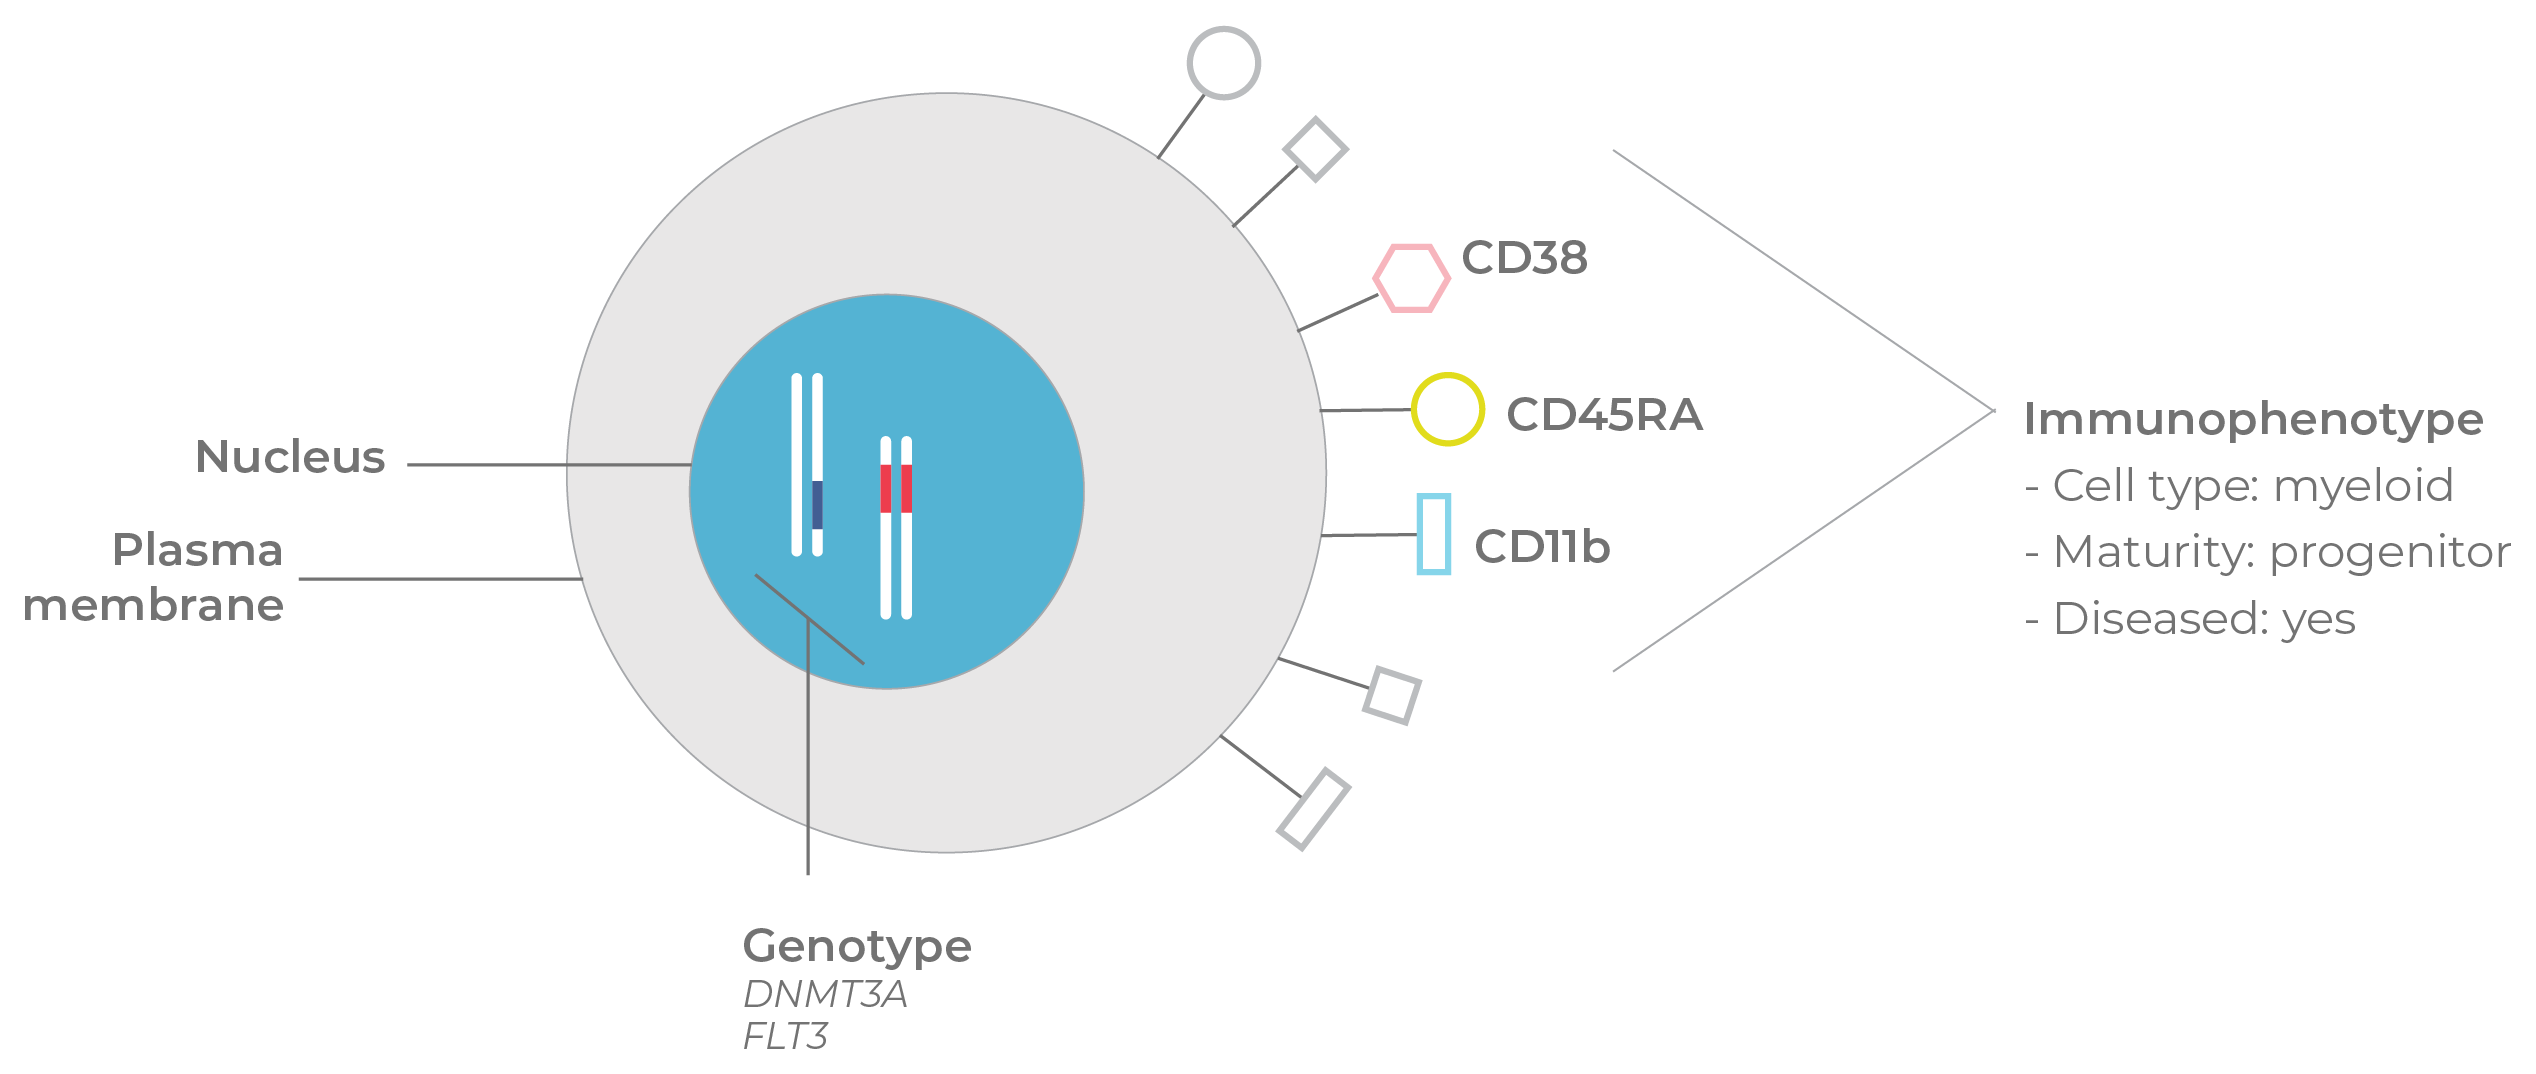 Figure 6. Genotype & immunophenotype.